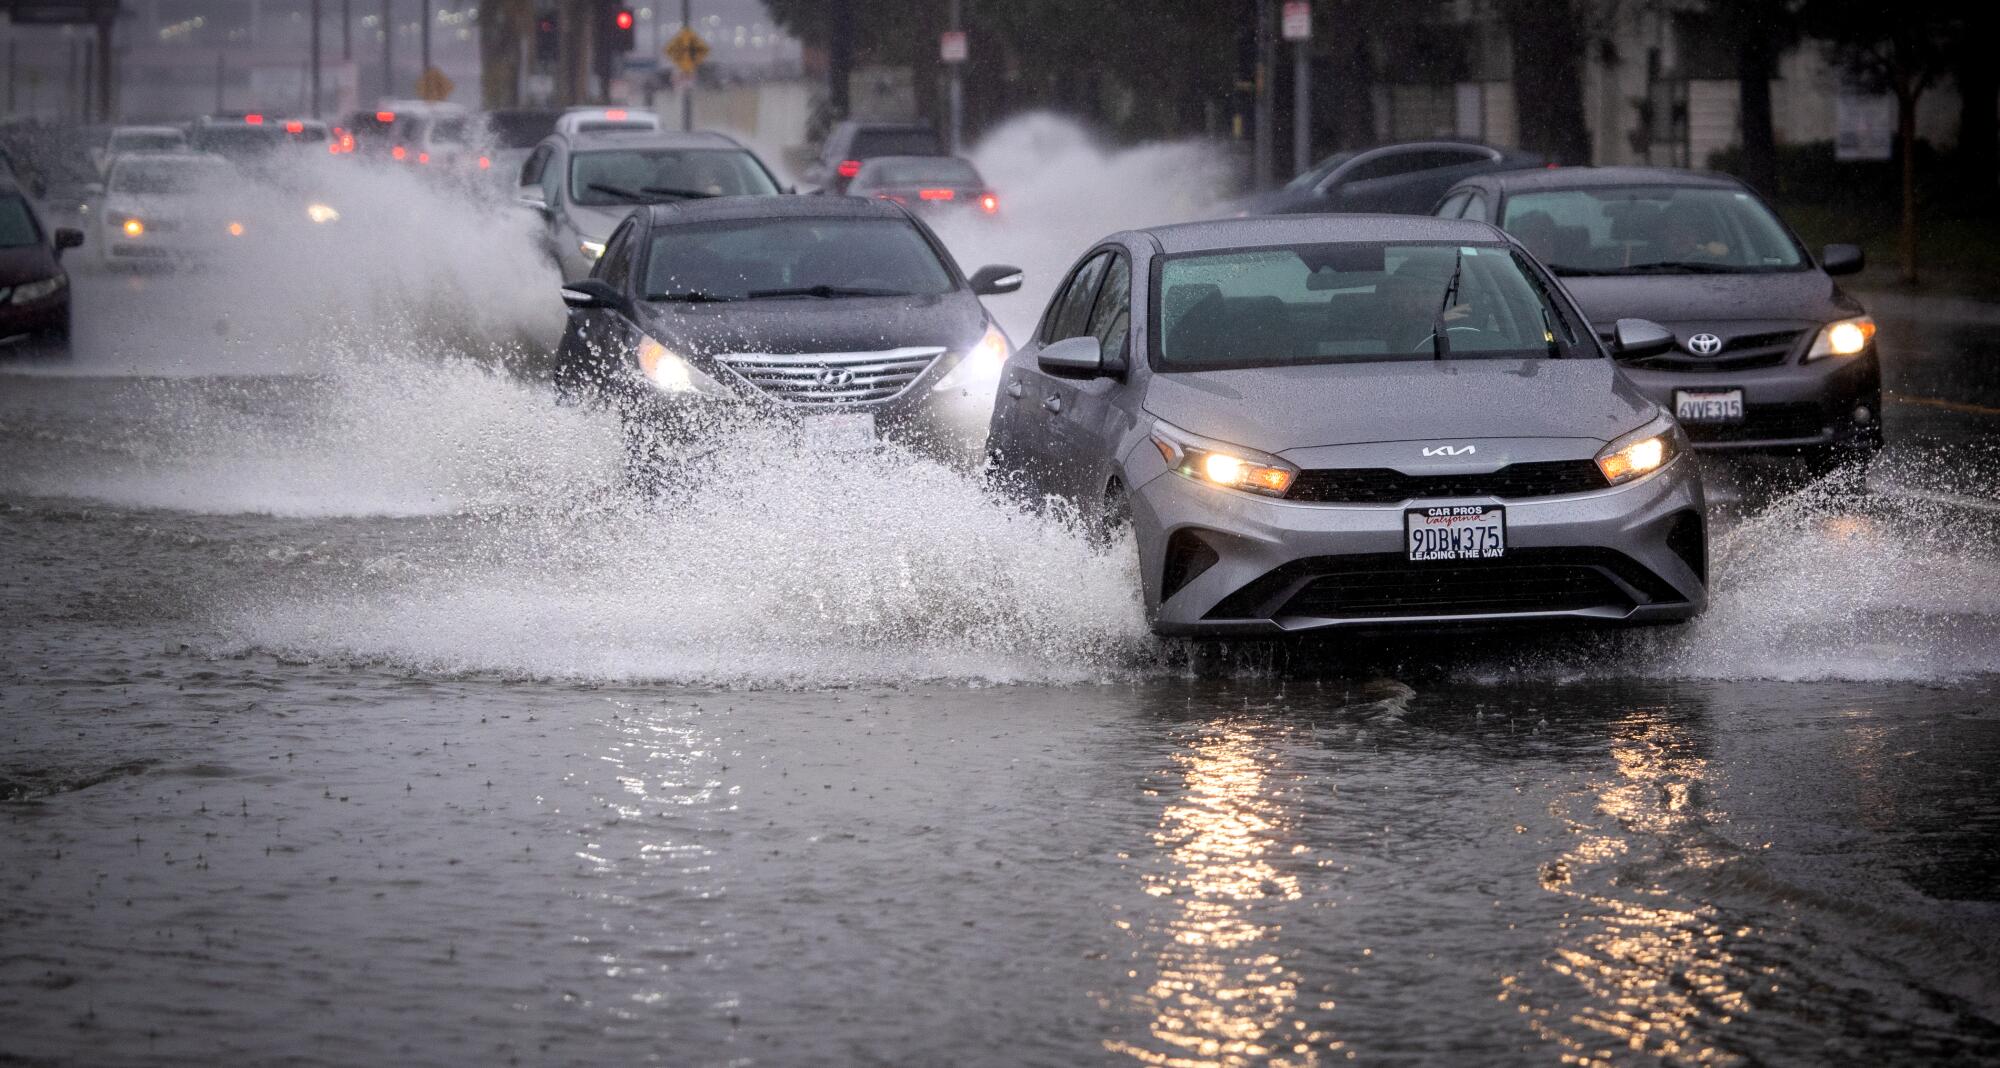 Motorists drive through a flooded area of Vanowen Street in North Hollywood amid heavy rain Friday.